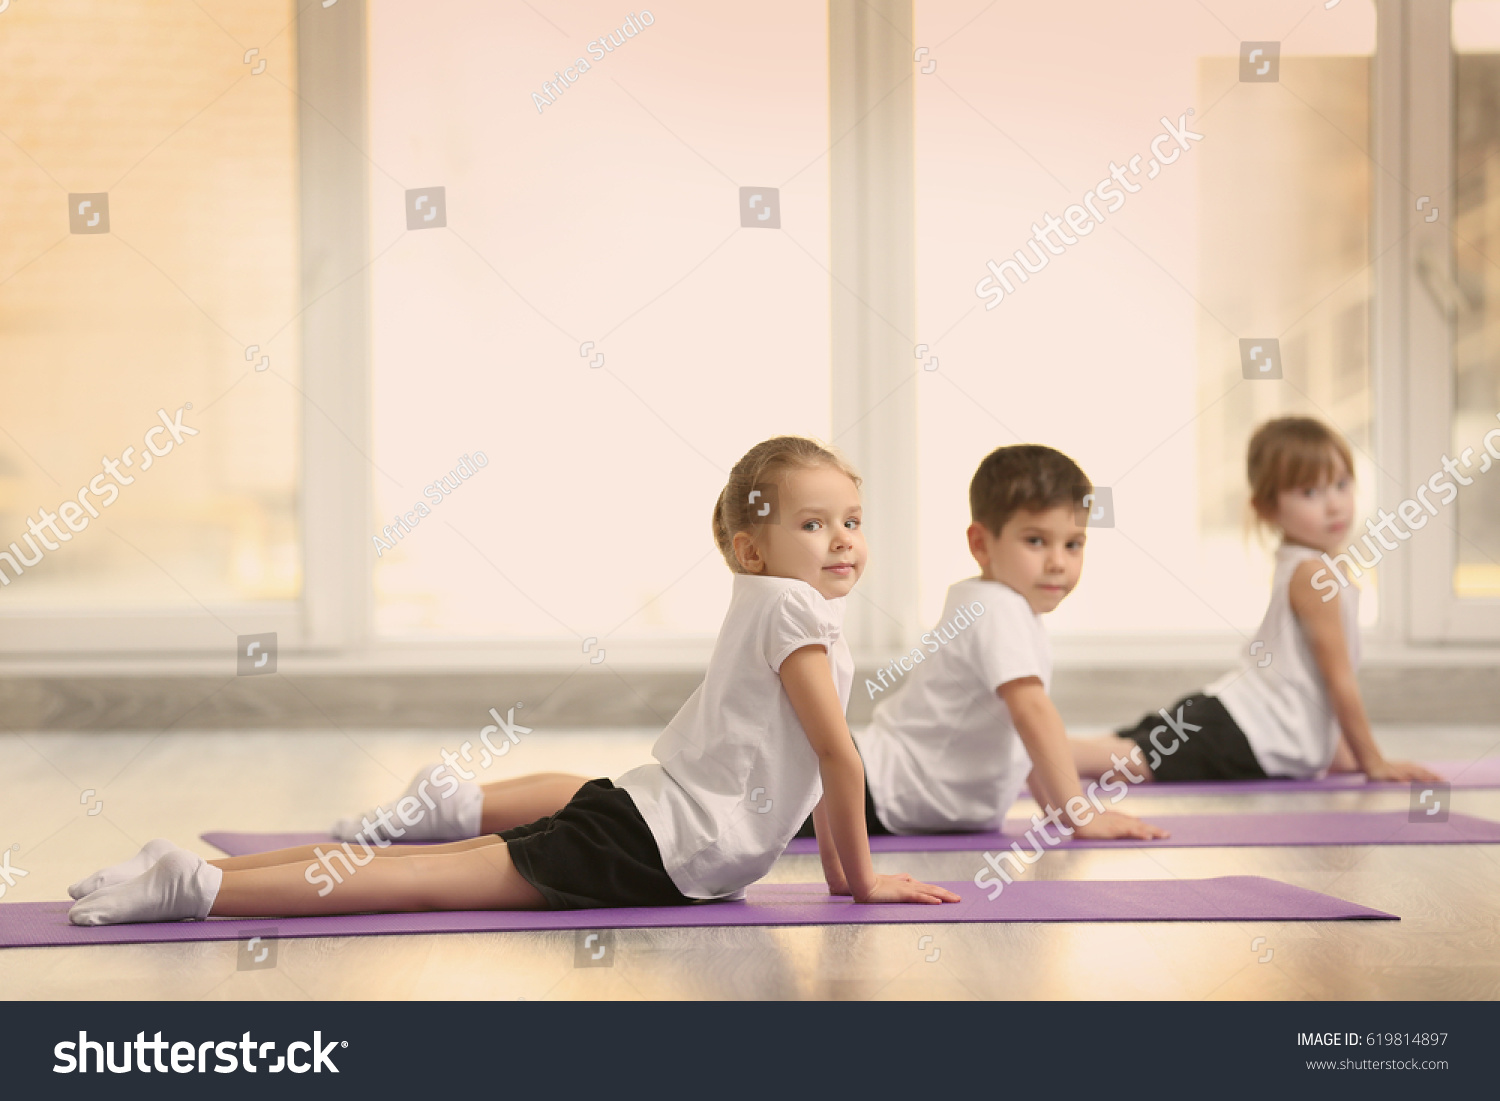 Group Children Doing Gymnastic Exercises Stock Photo Edit Now 619814897